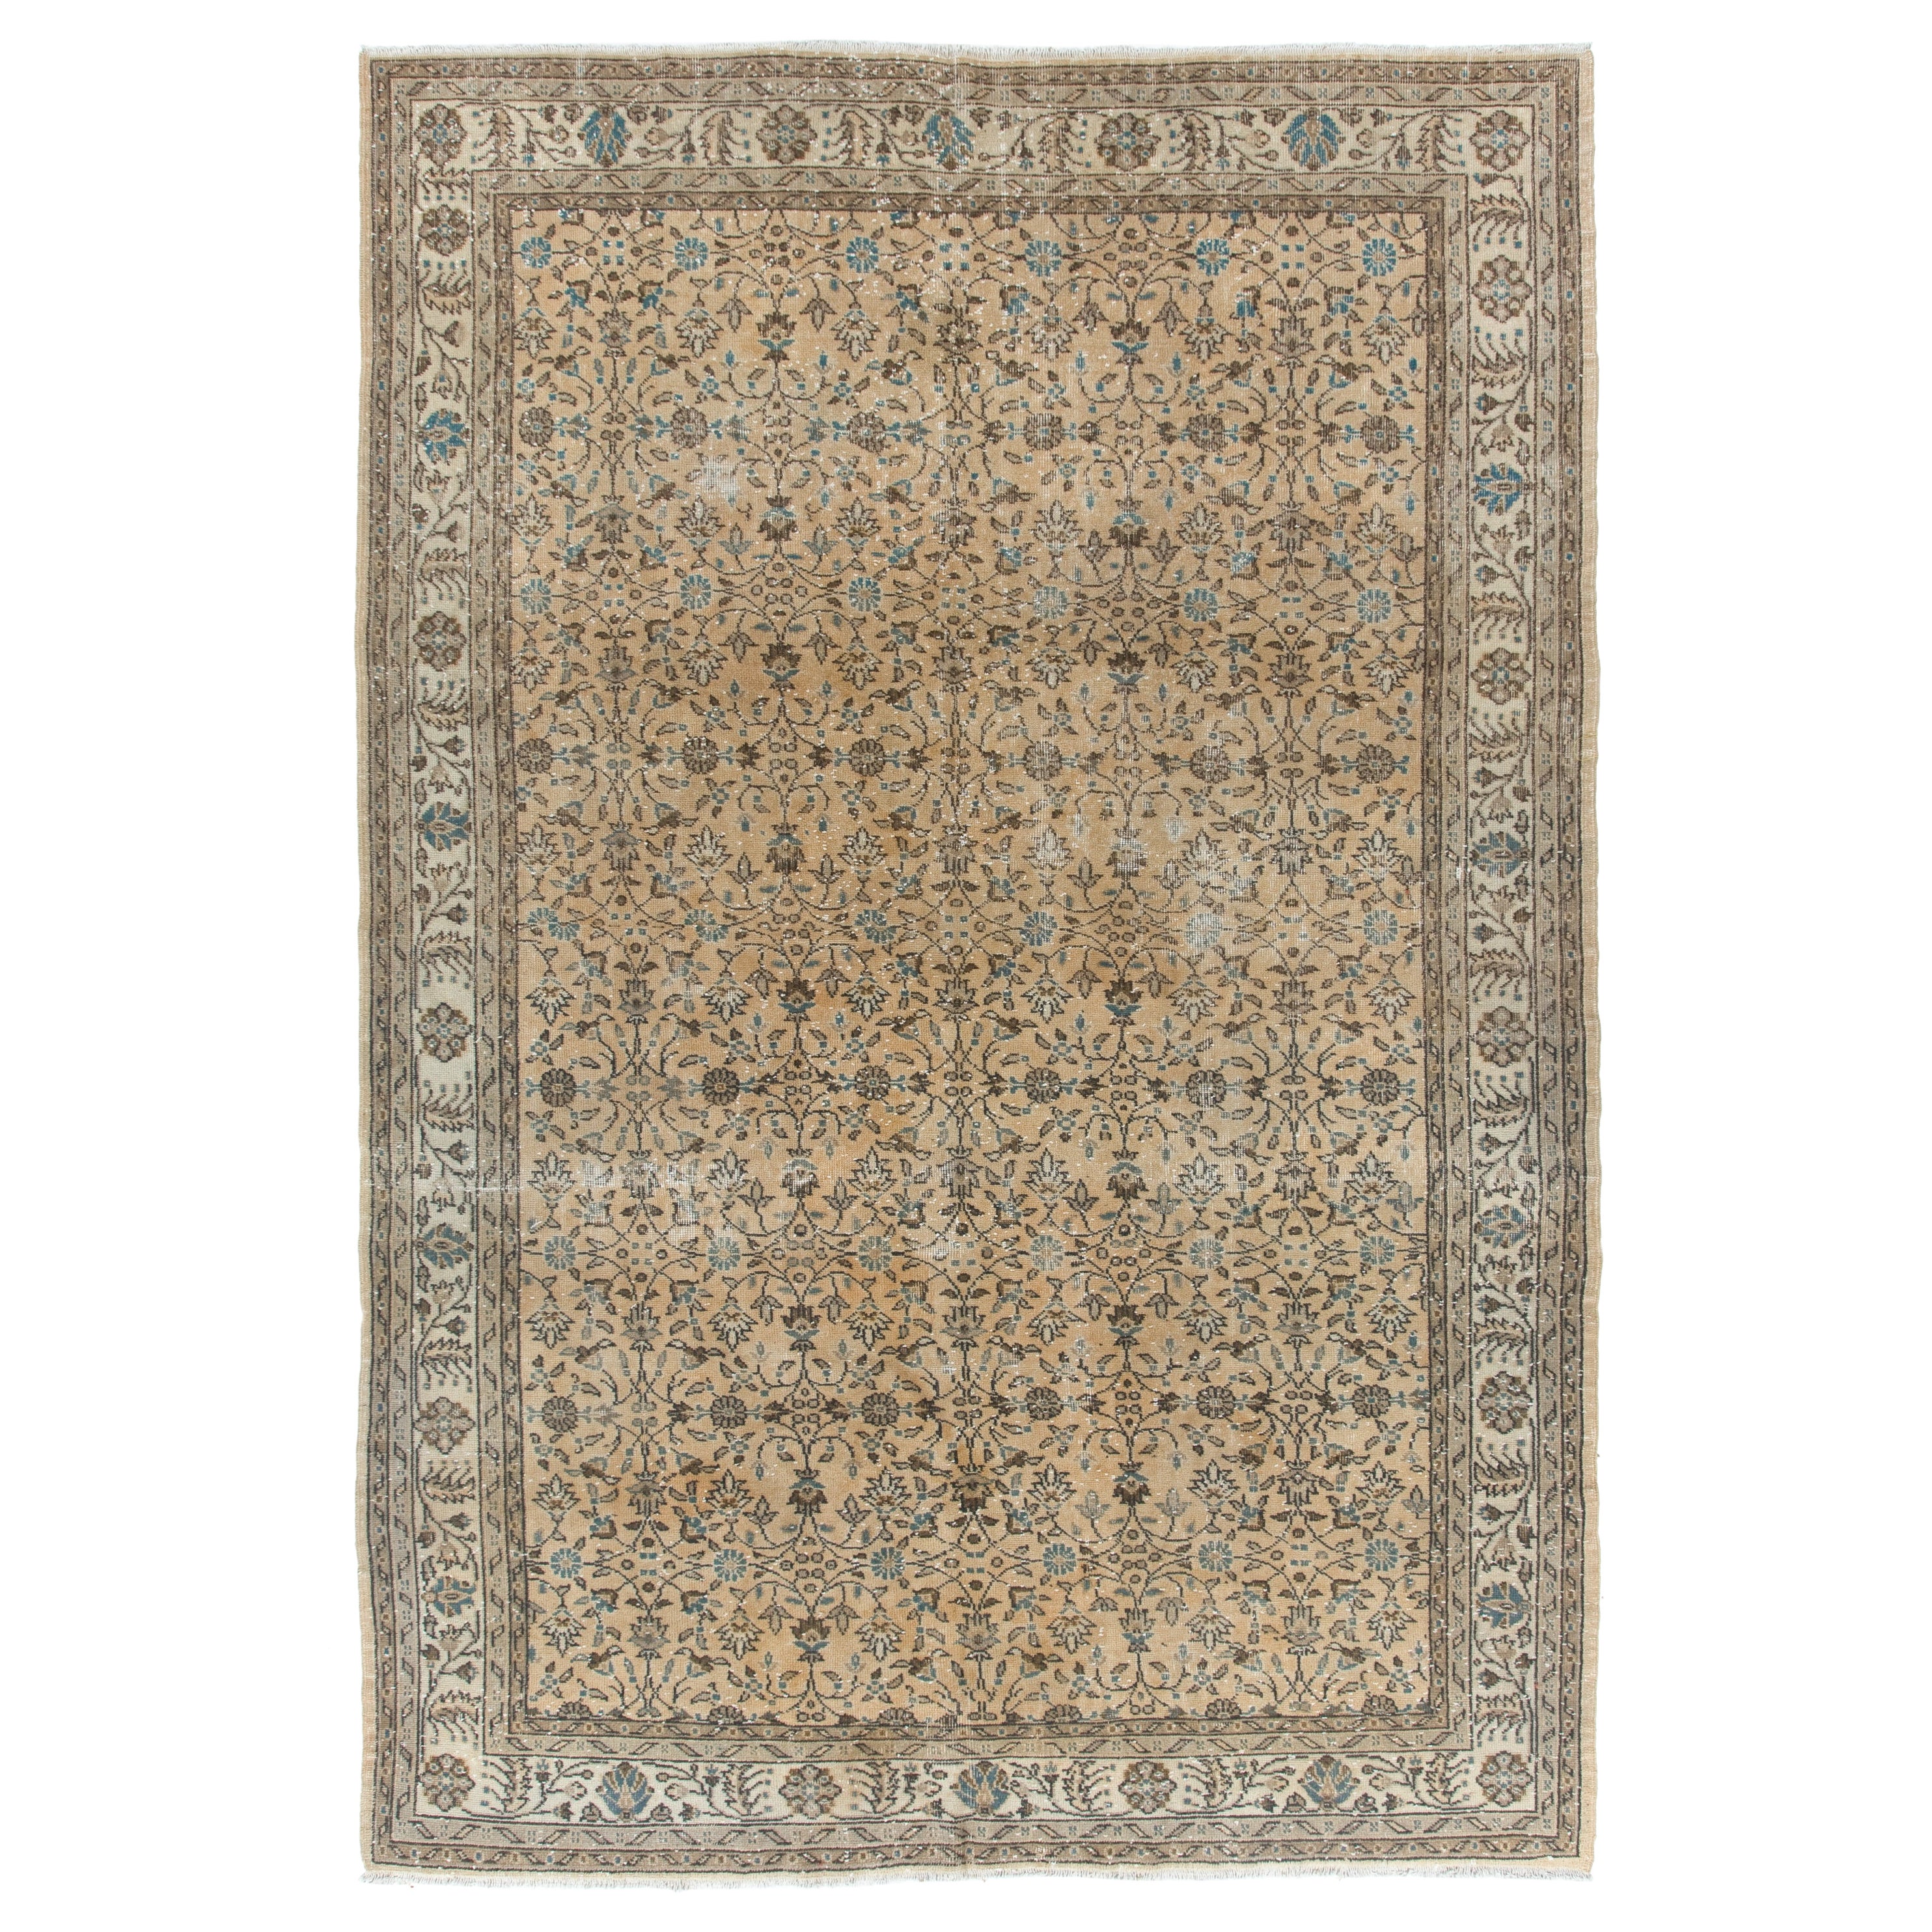 7.5x11 Ft Vintage Turkish Wool Rug with Floral Design. Handmade Oriental Carpet For Sale